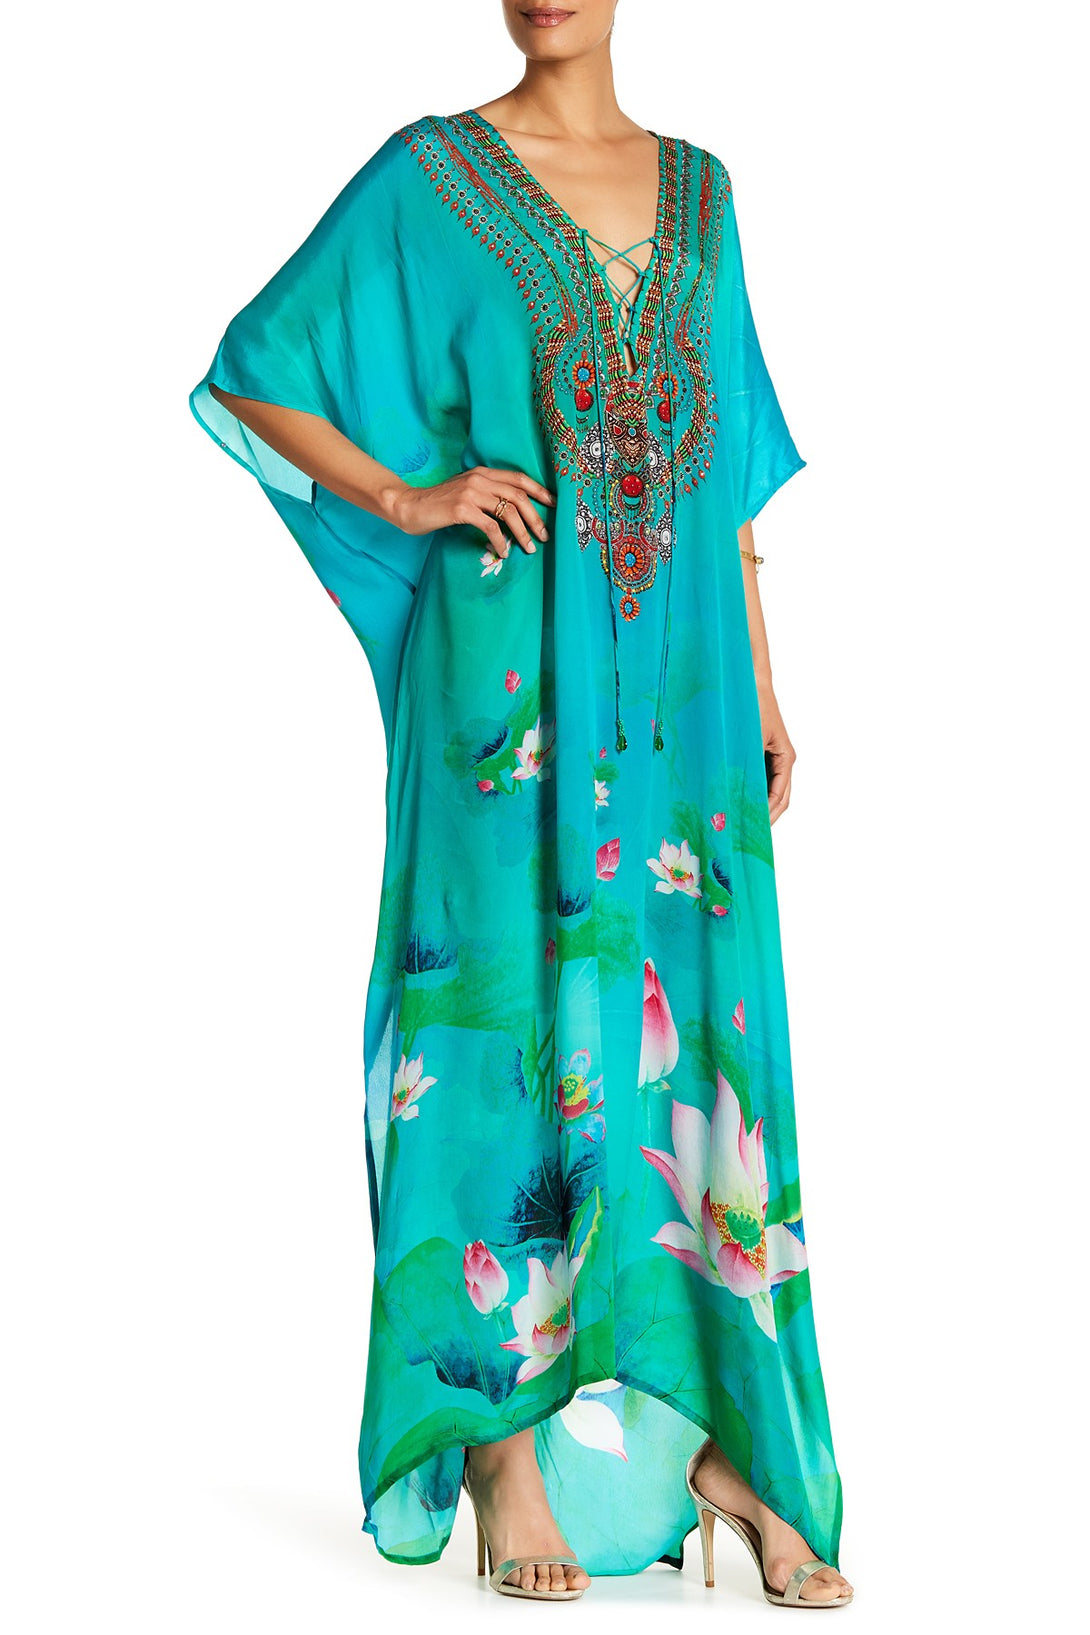  caftans for plus size, silk caftan dress, Shahida Parides, caftans for women, dresses for vacation,